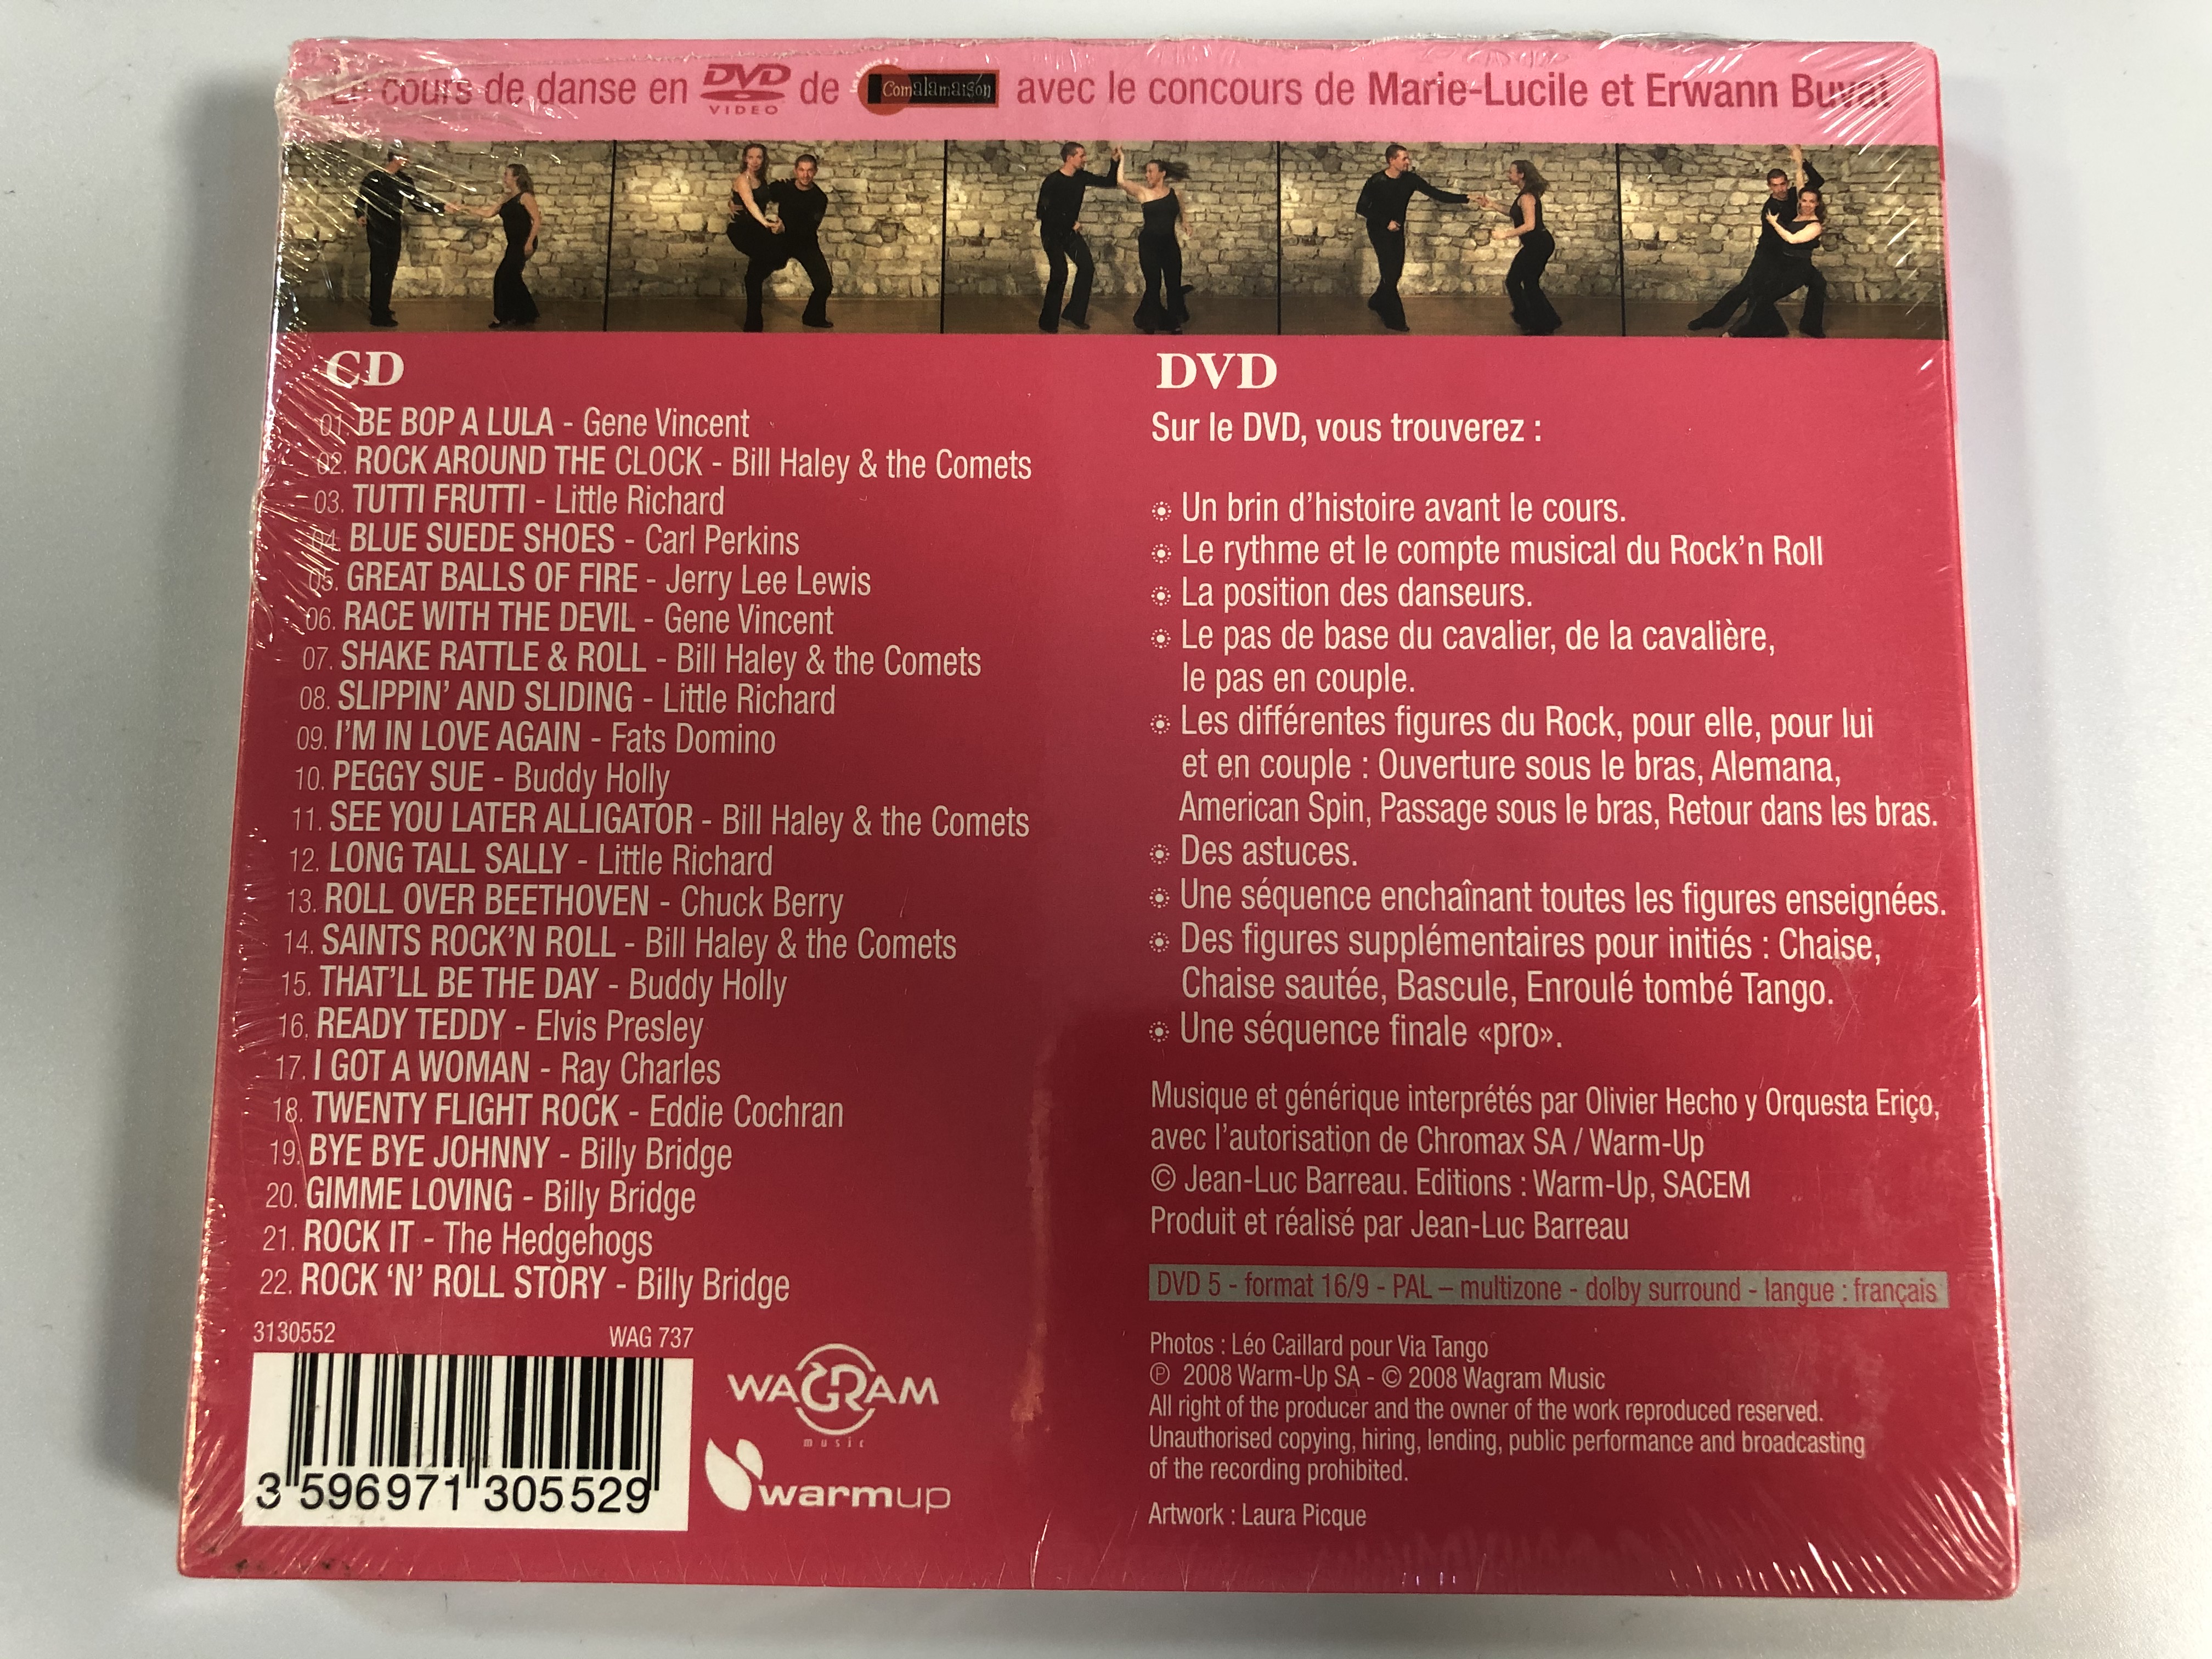 rock-n-roll-collection-dansez-wagram-music-audio-cd-dvd-2008-3130552-2-.jpg